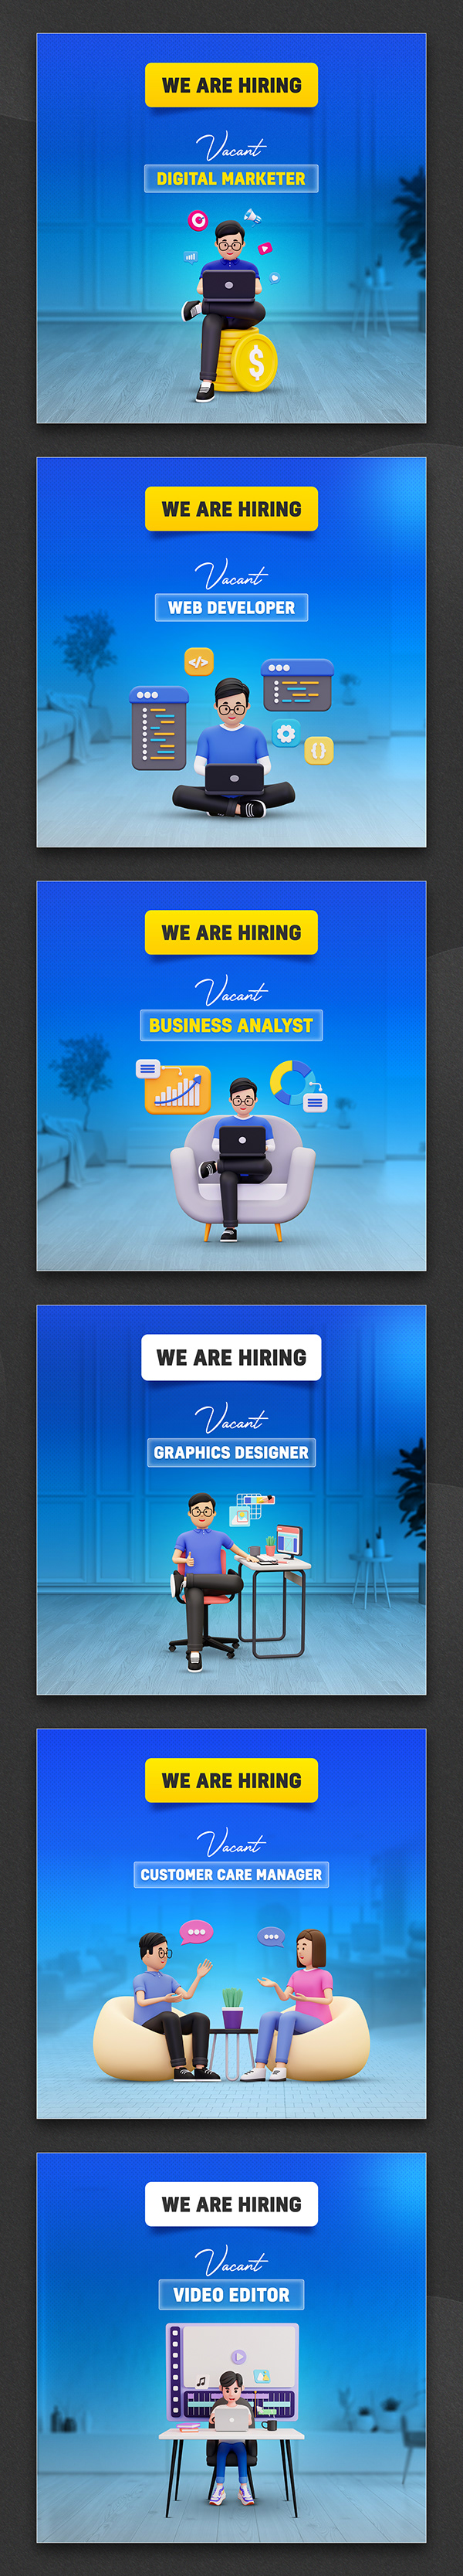 Hiring job vacancy | Social Media Design | Creative Ads